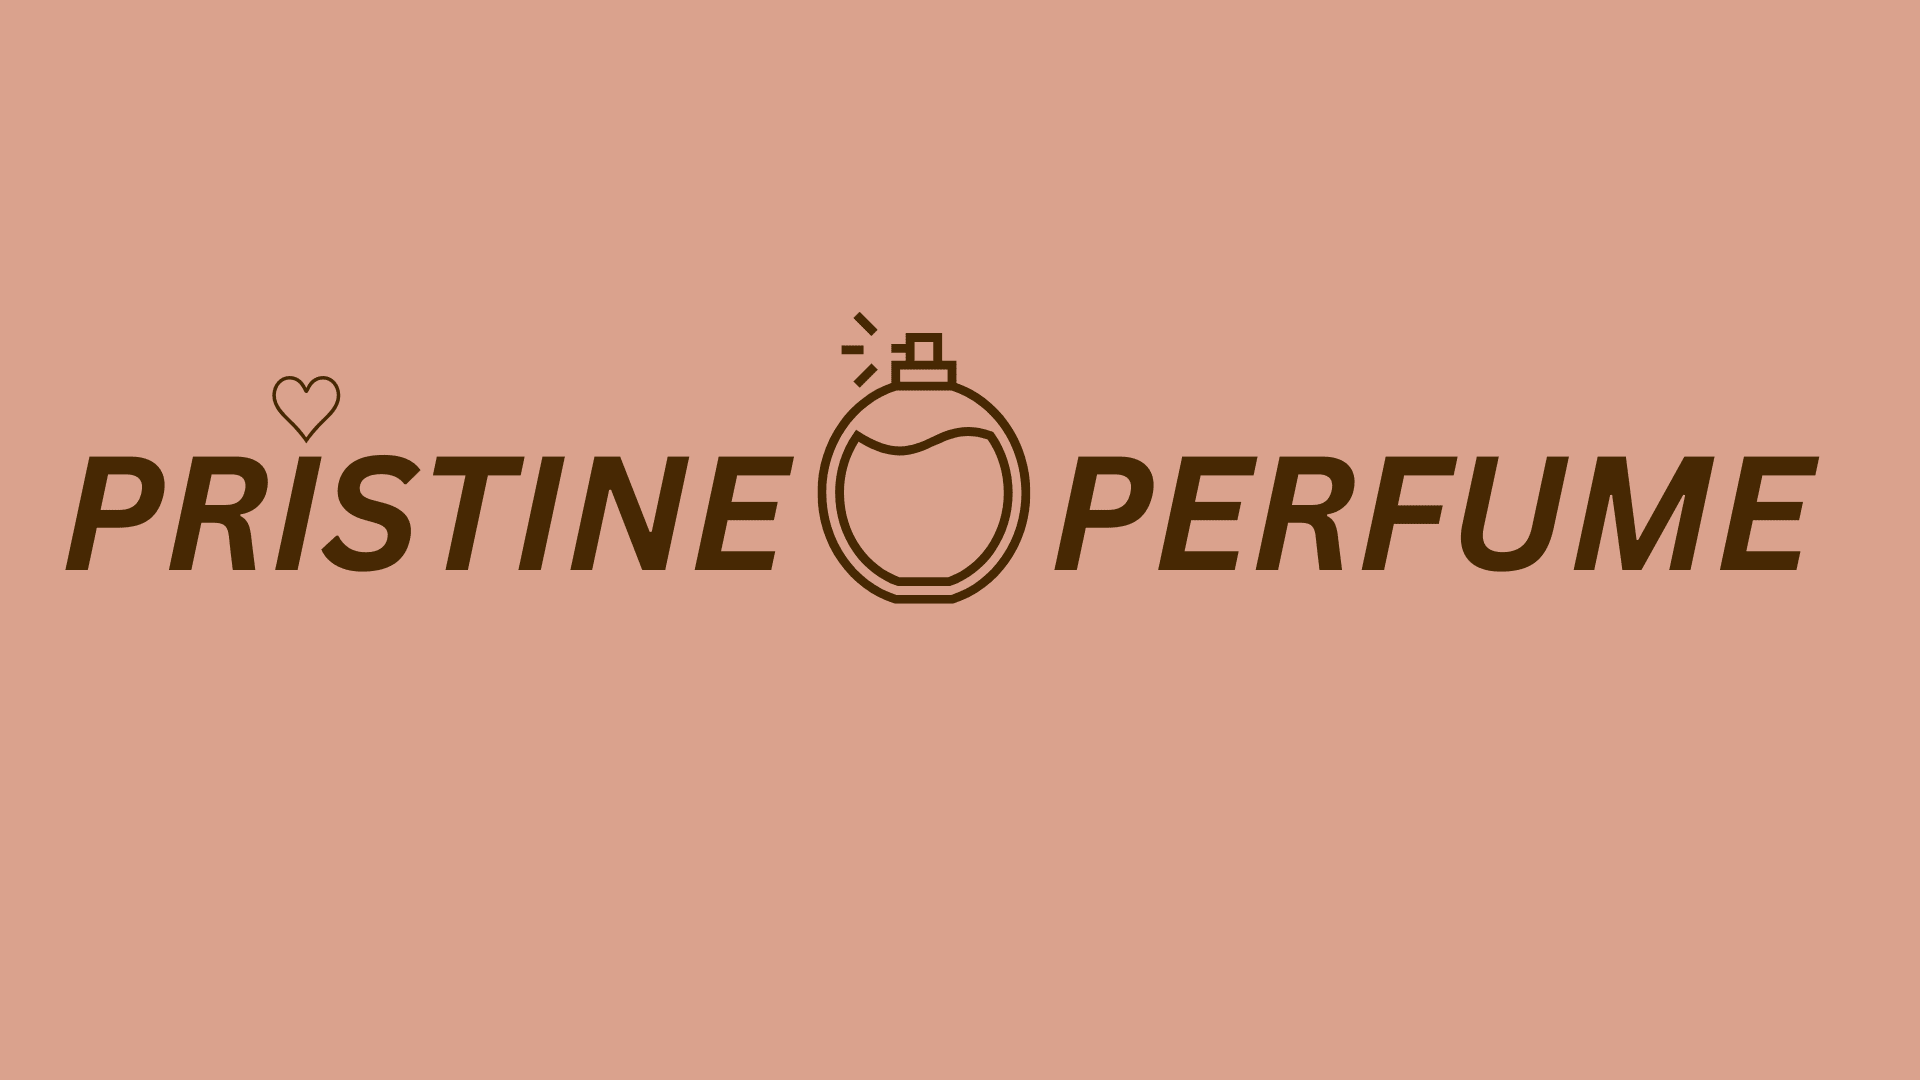 Pristine Perfume